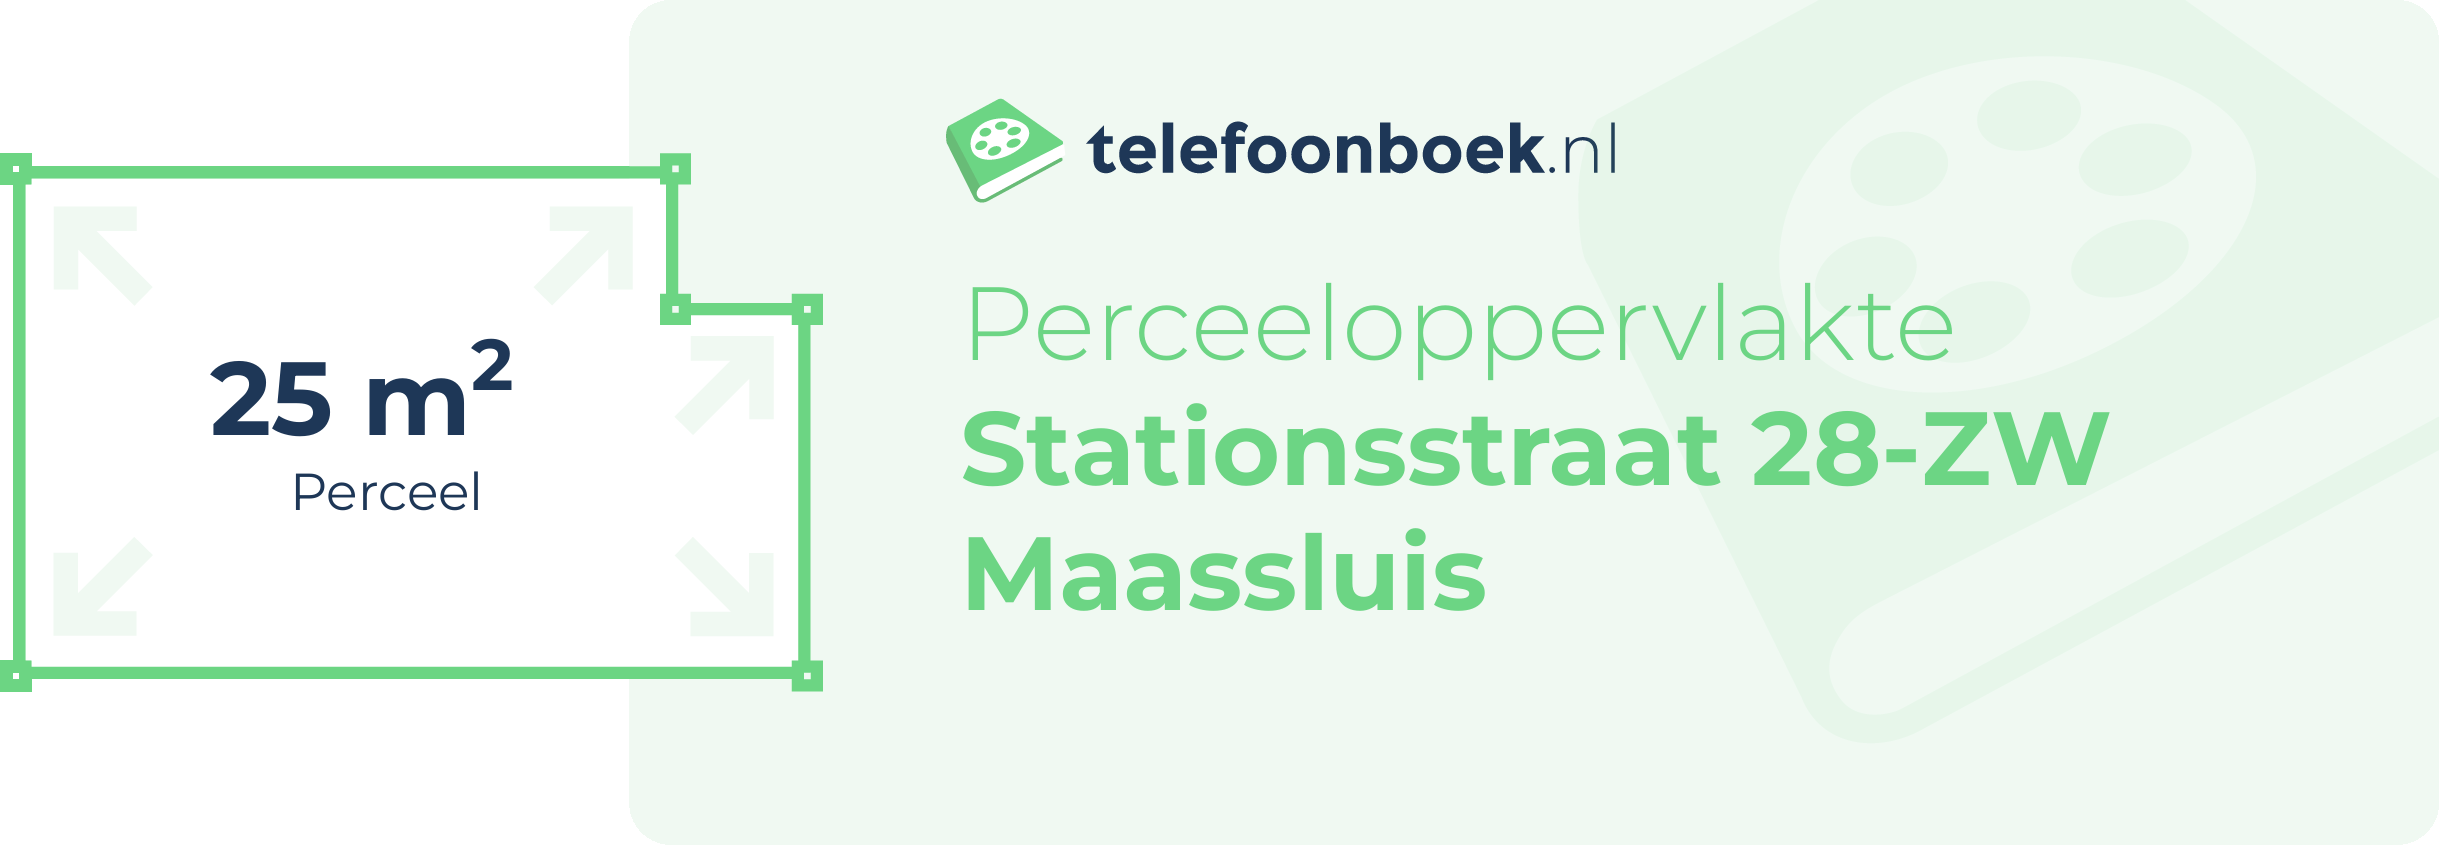 Perceeloppervlakte Stationsstraat 28-ZW Maassluis